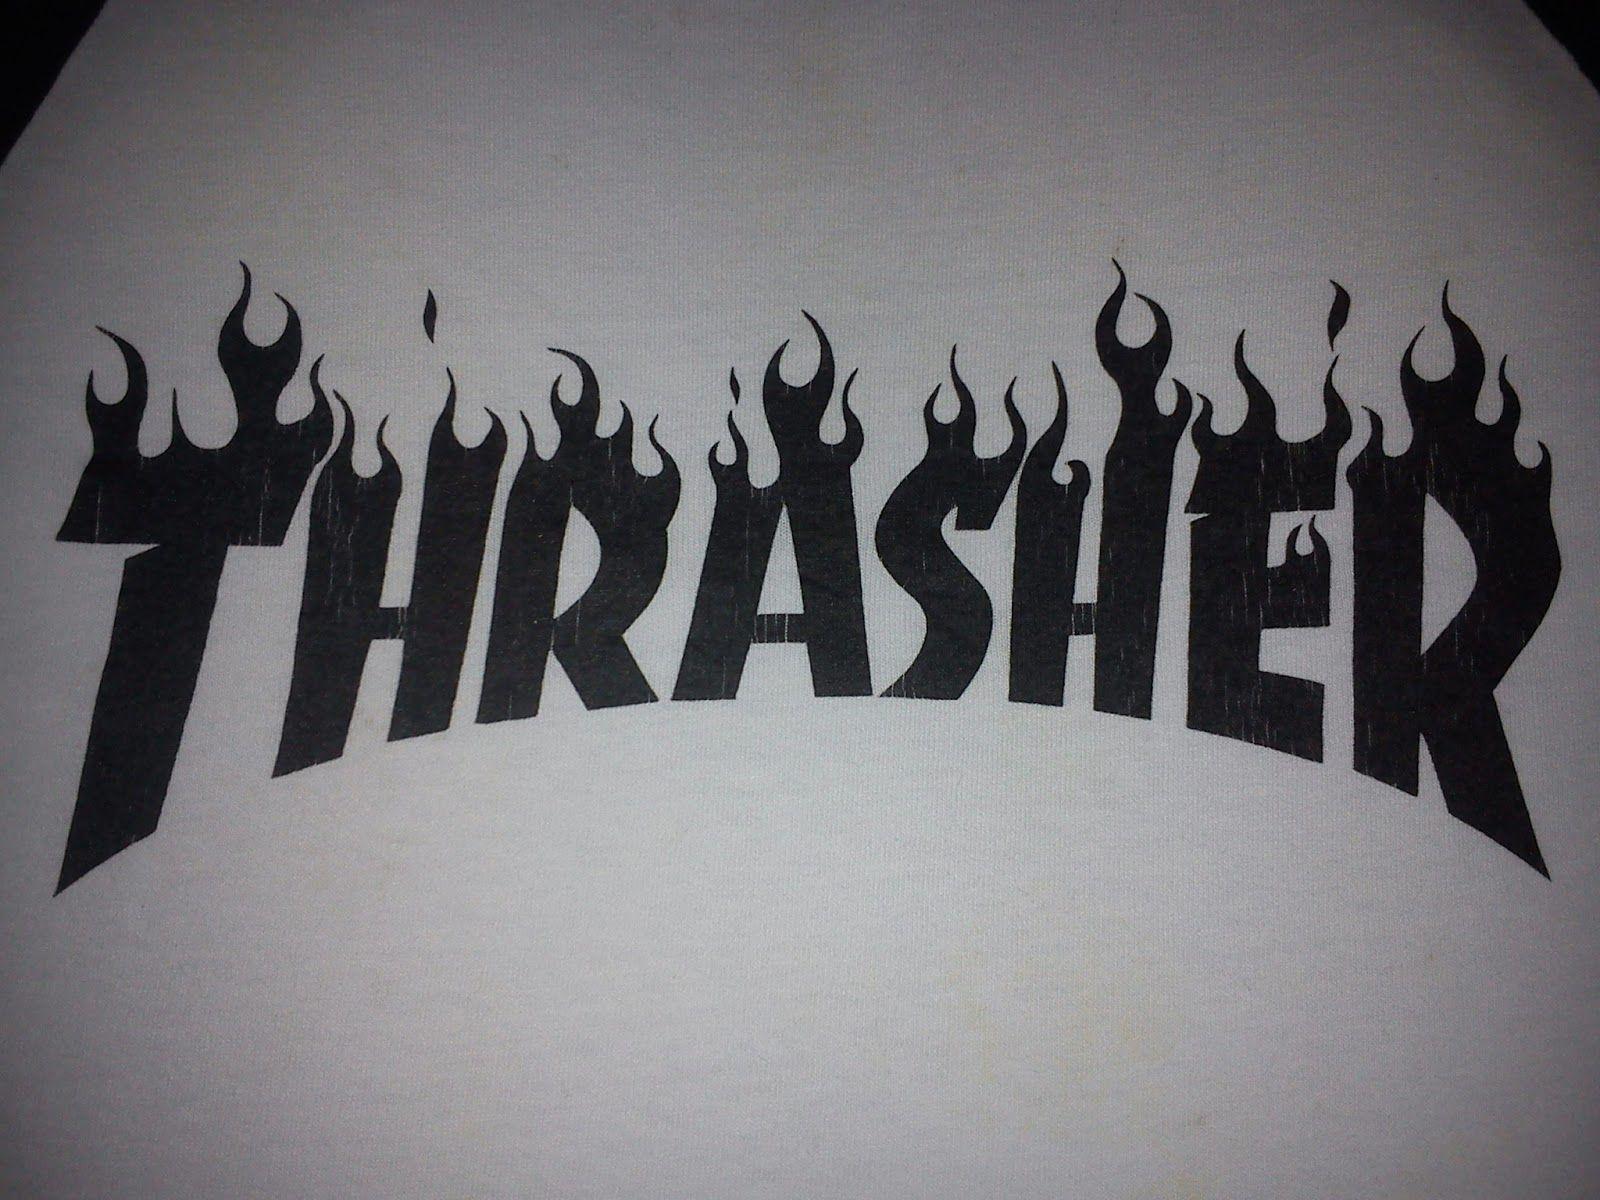 Thrasher Magazine Wallpaper Download Free